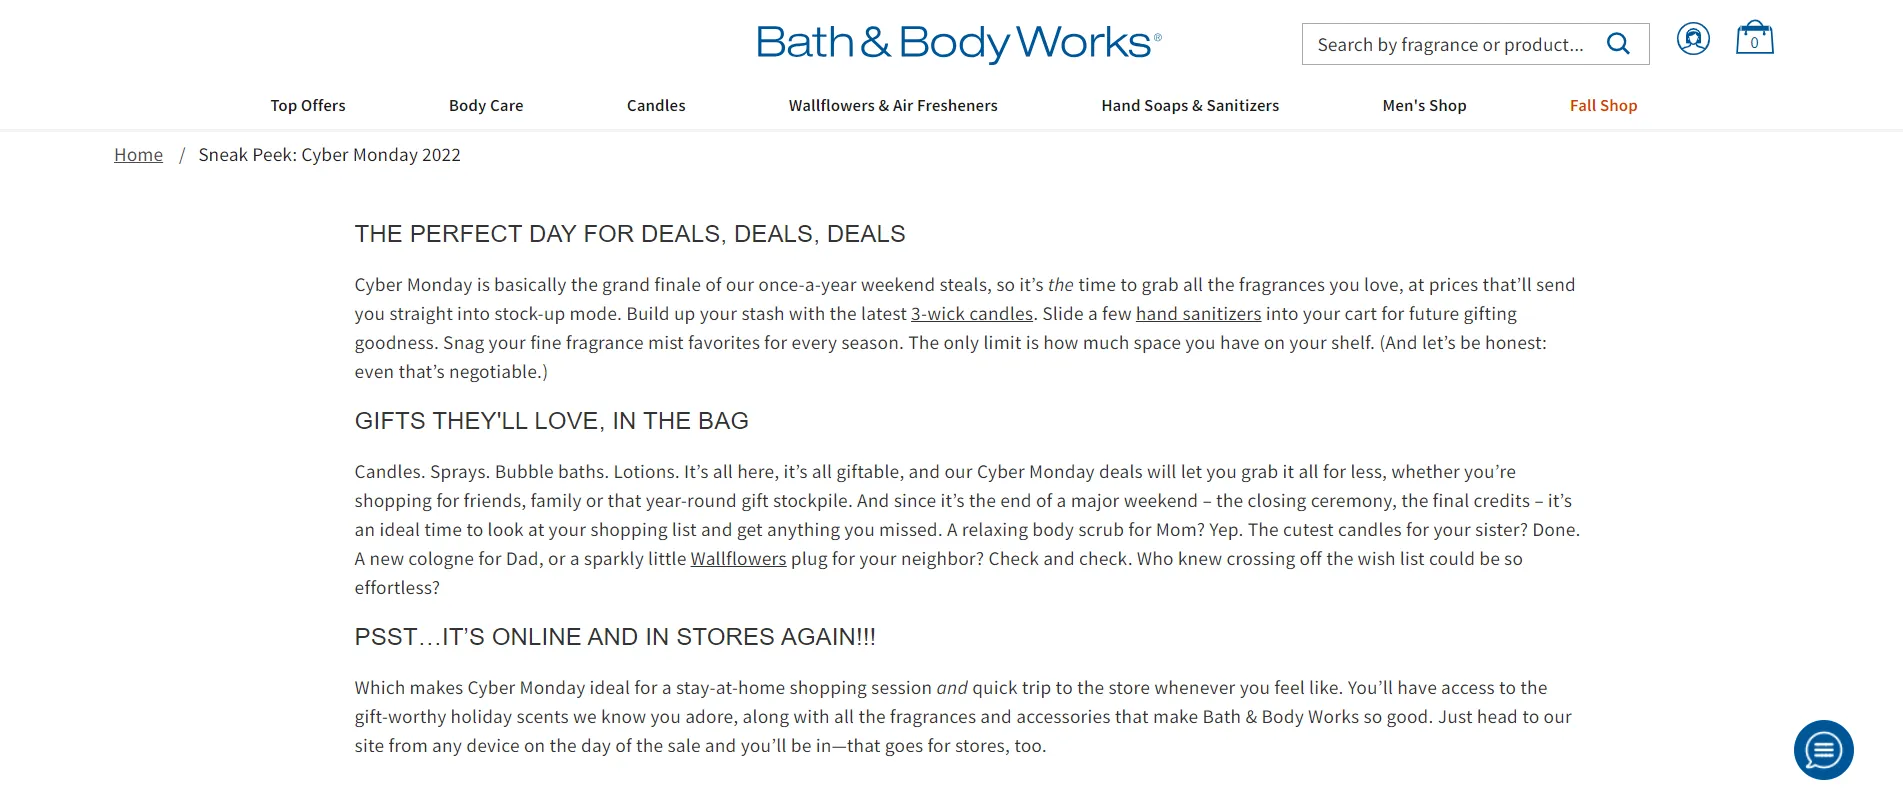 Bath & Body Works Cyber Monday advertising